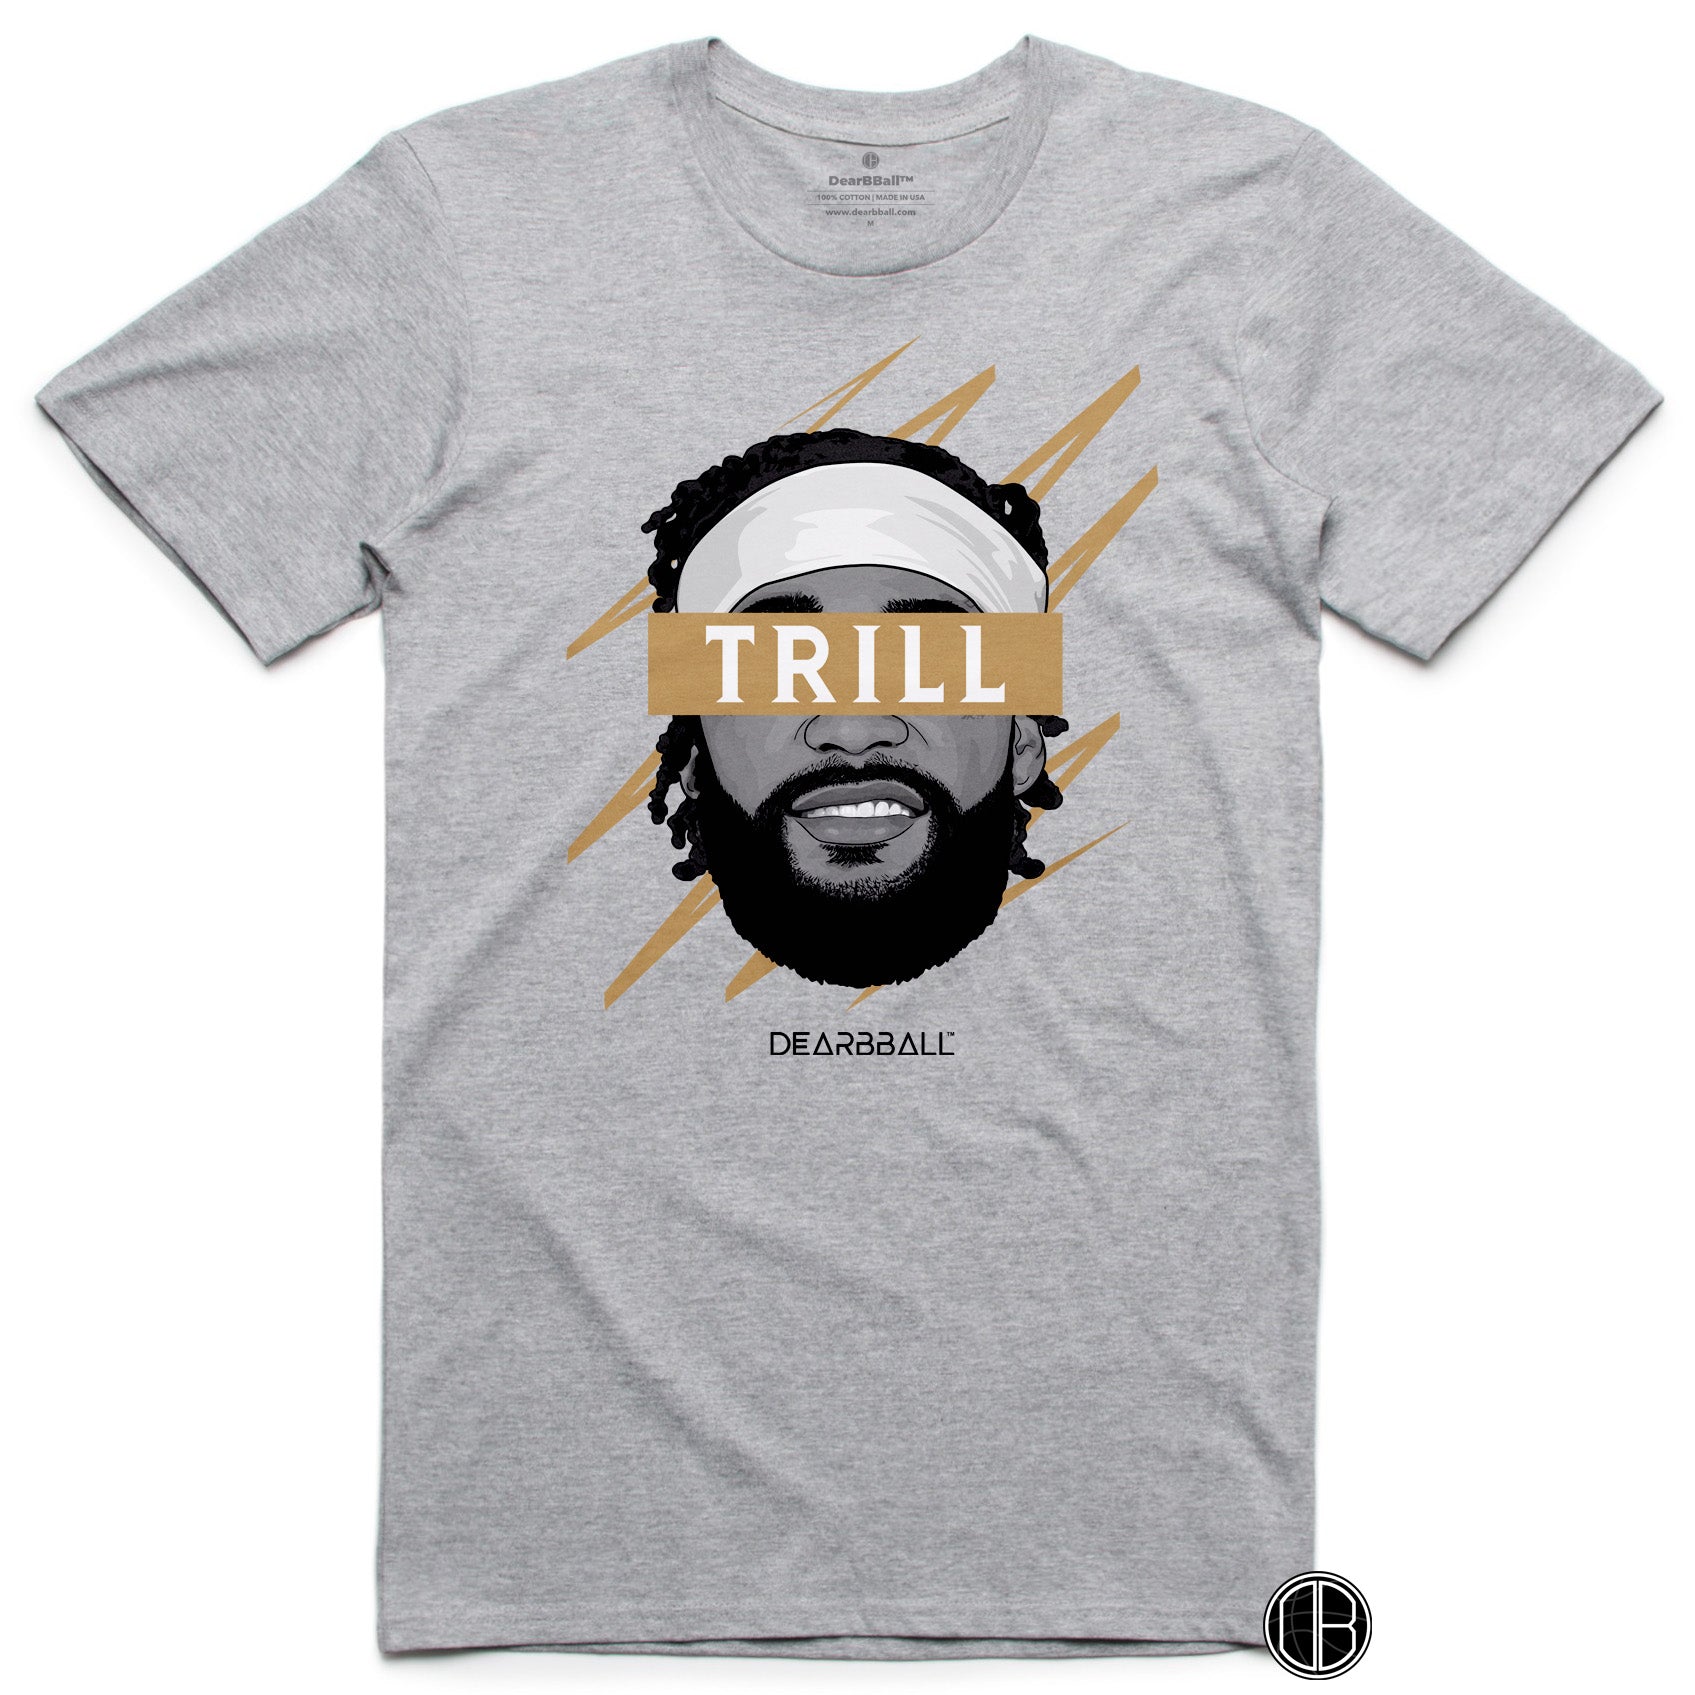 DearBBall T-Shirt - TRILL Gold Edition